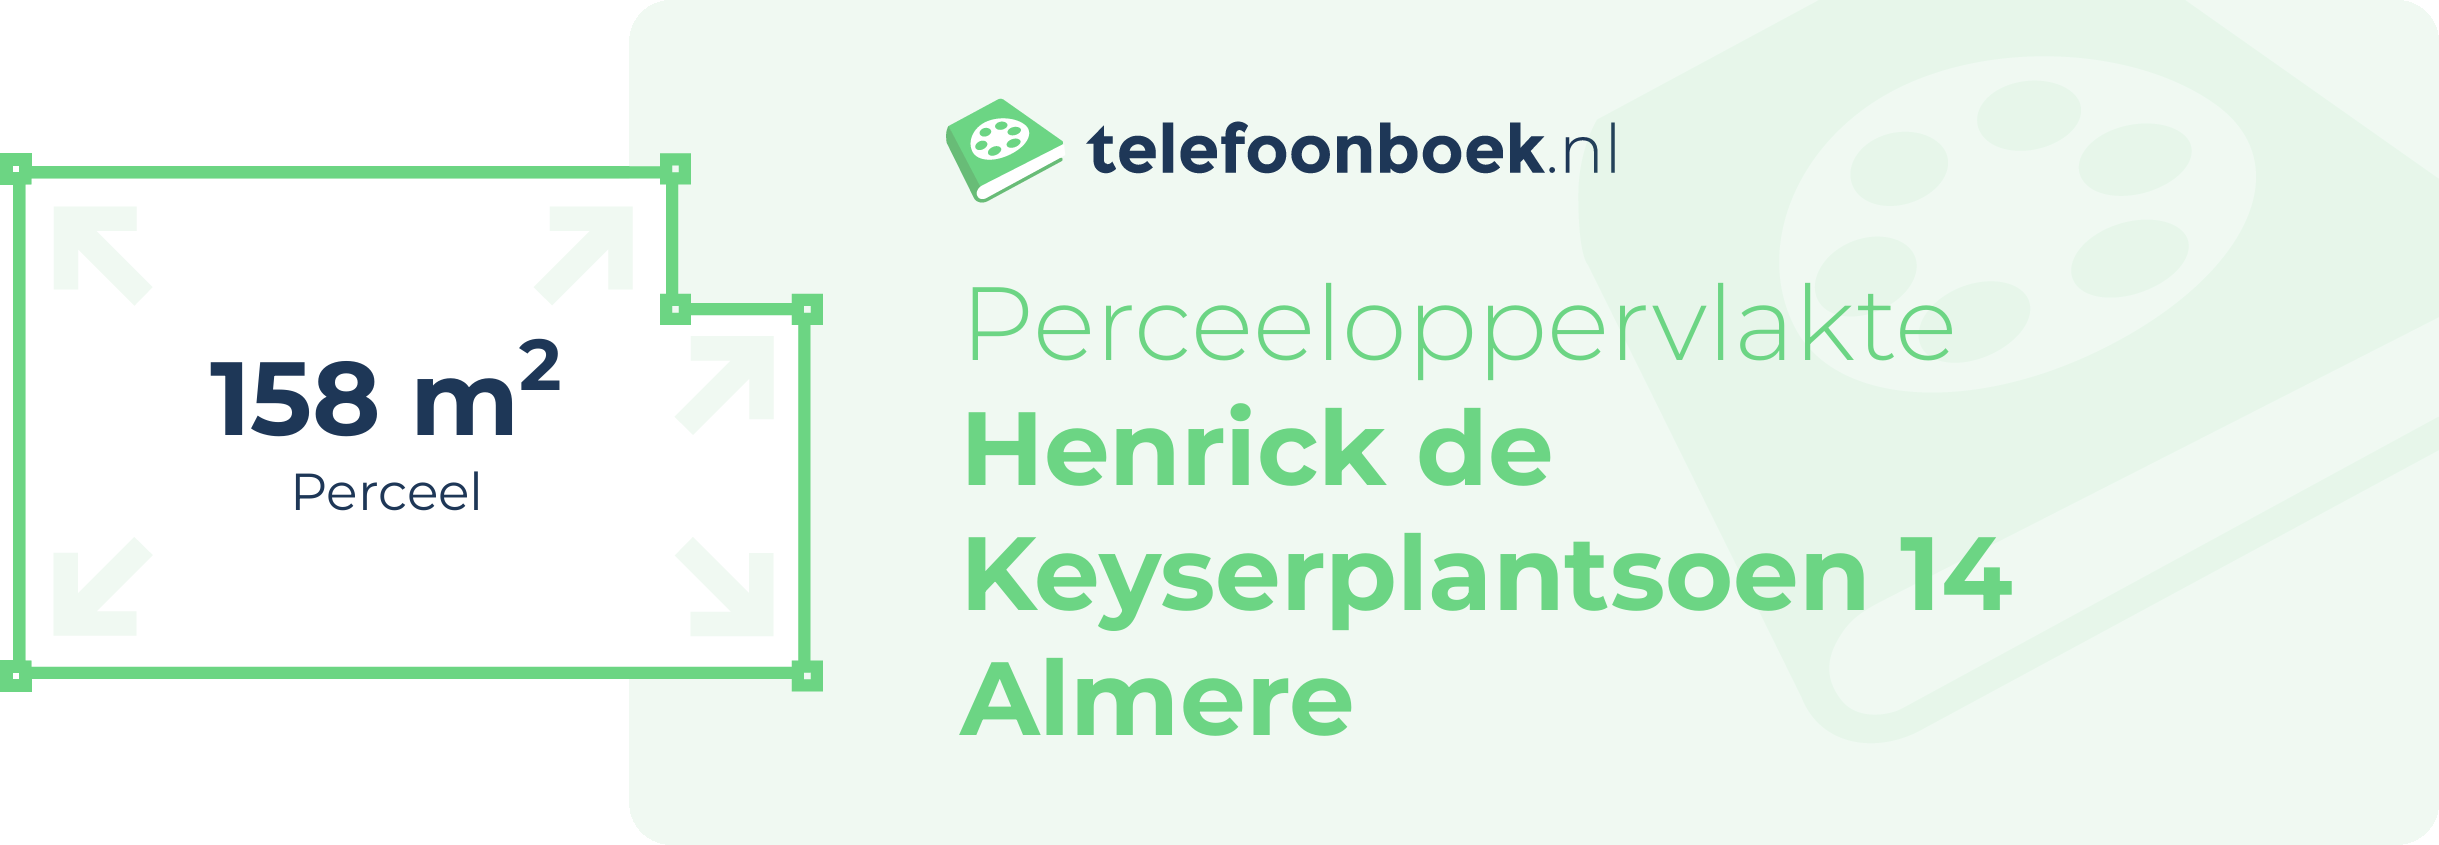 Perceeloppervlakte Henrick De Keyserplantsoen 14 Almere